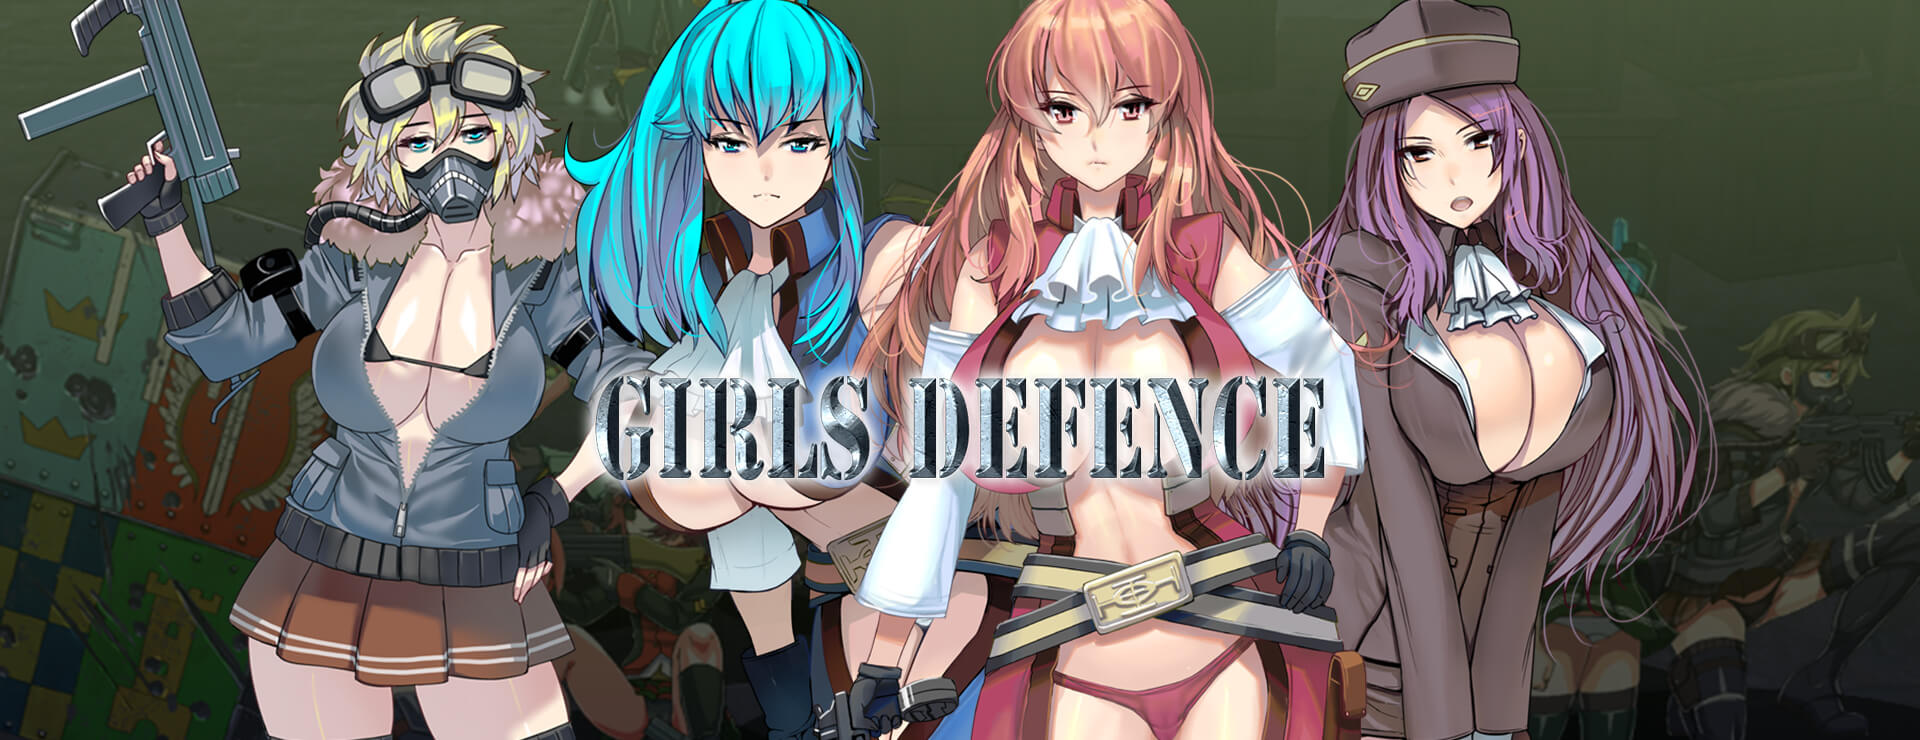 Girls Defence - Action Aventure Jeu